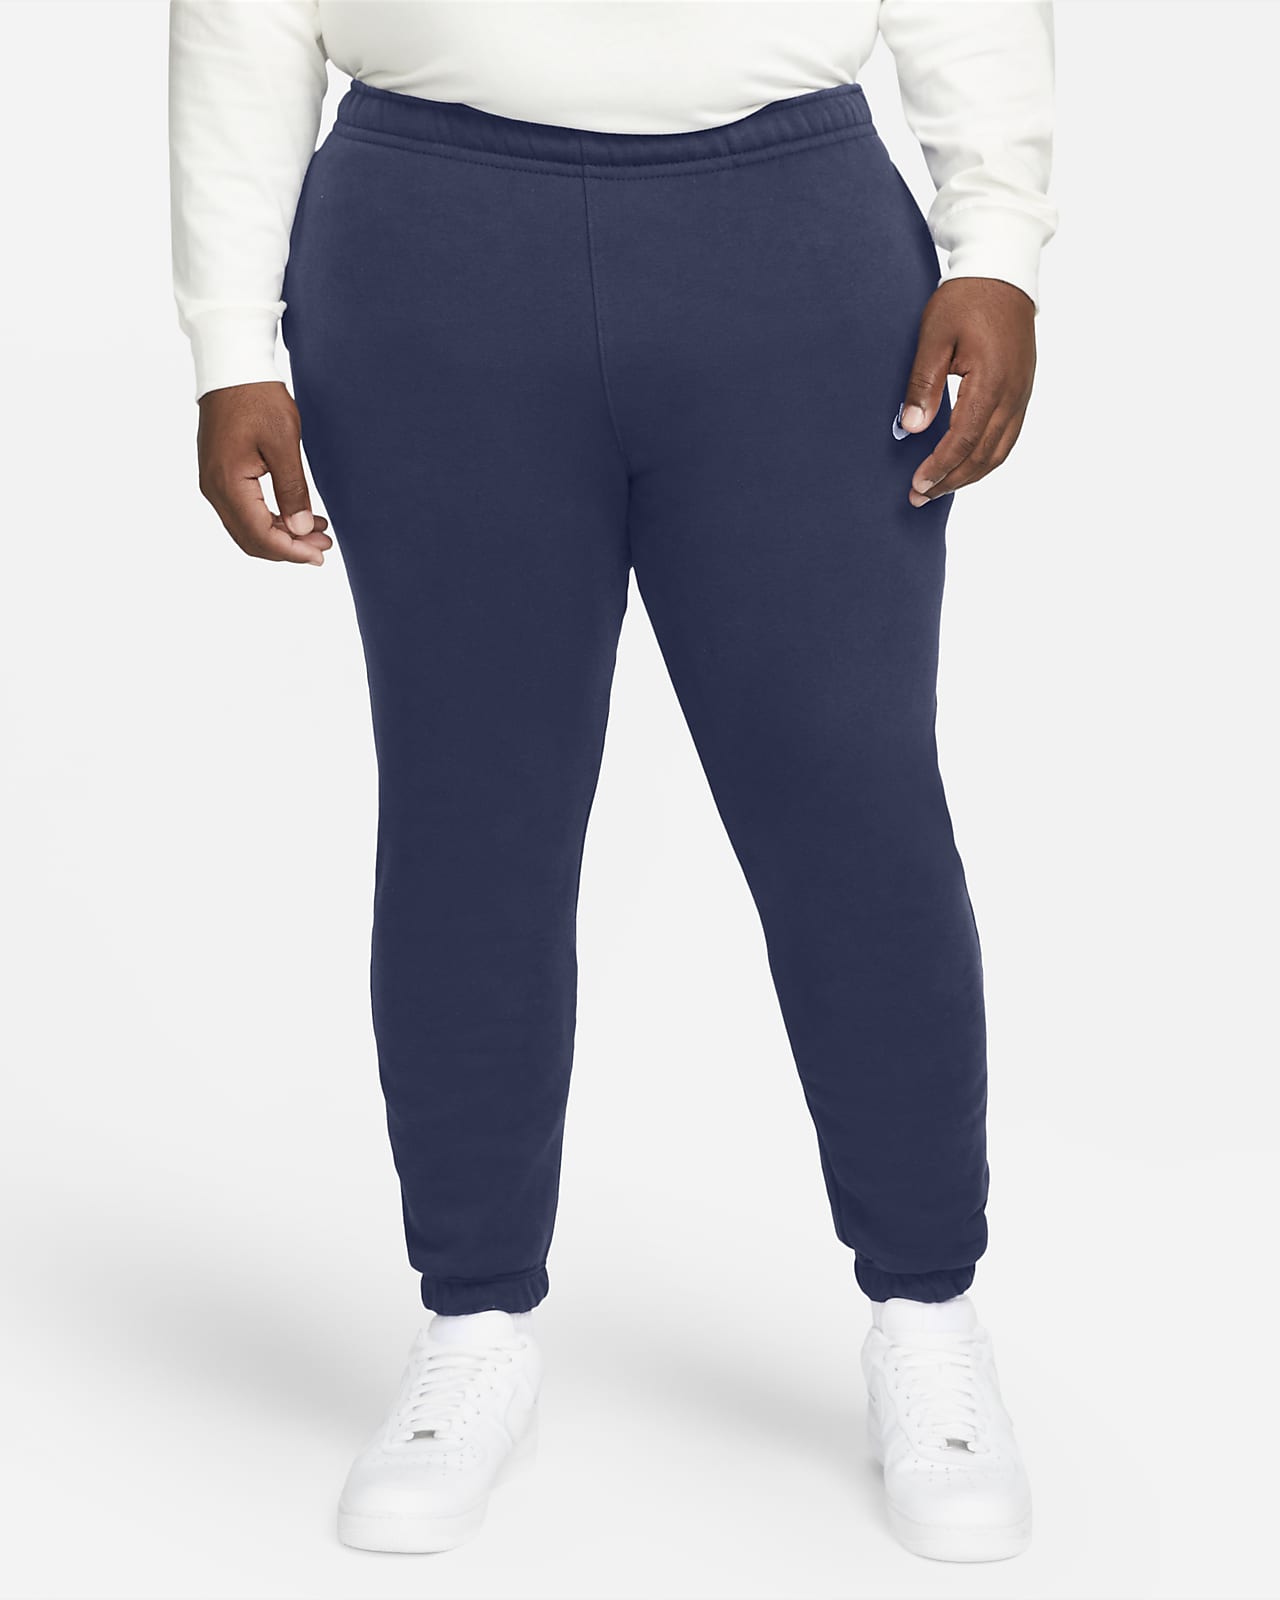 Women's Nike Air Fleece Trousers XS Blue Purple Sweatpants Gym Casual